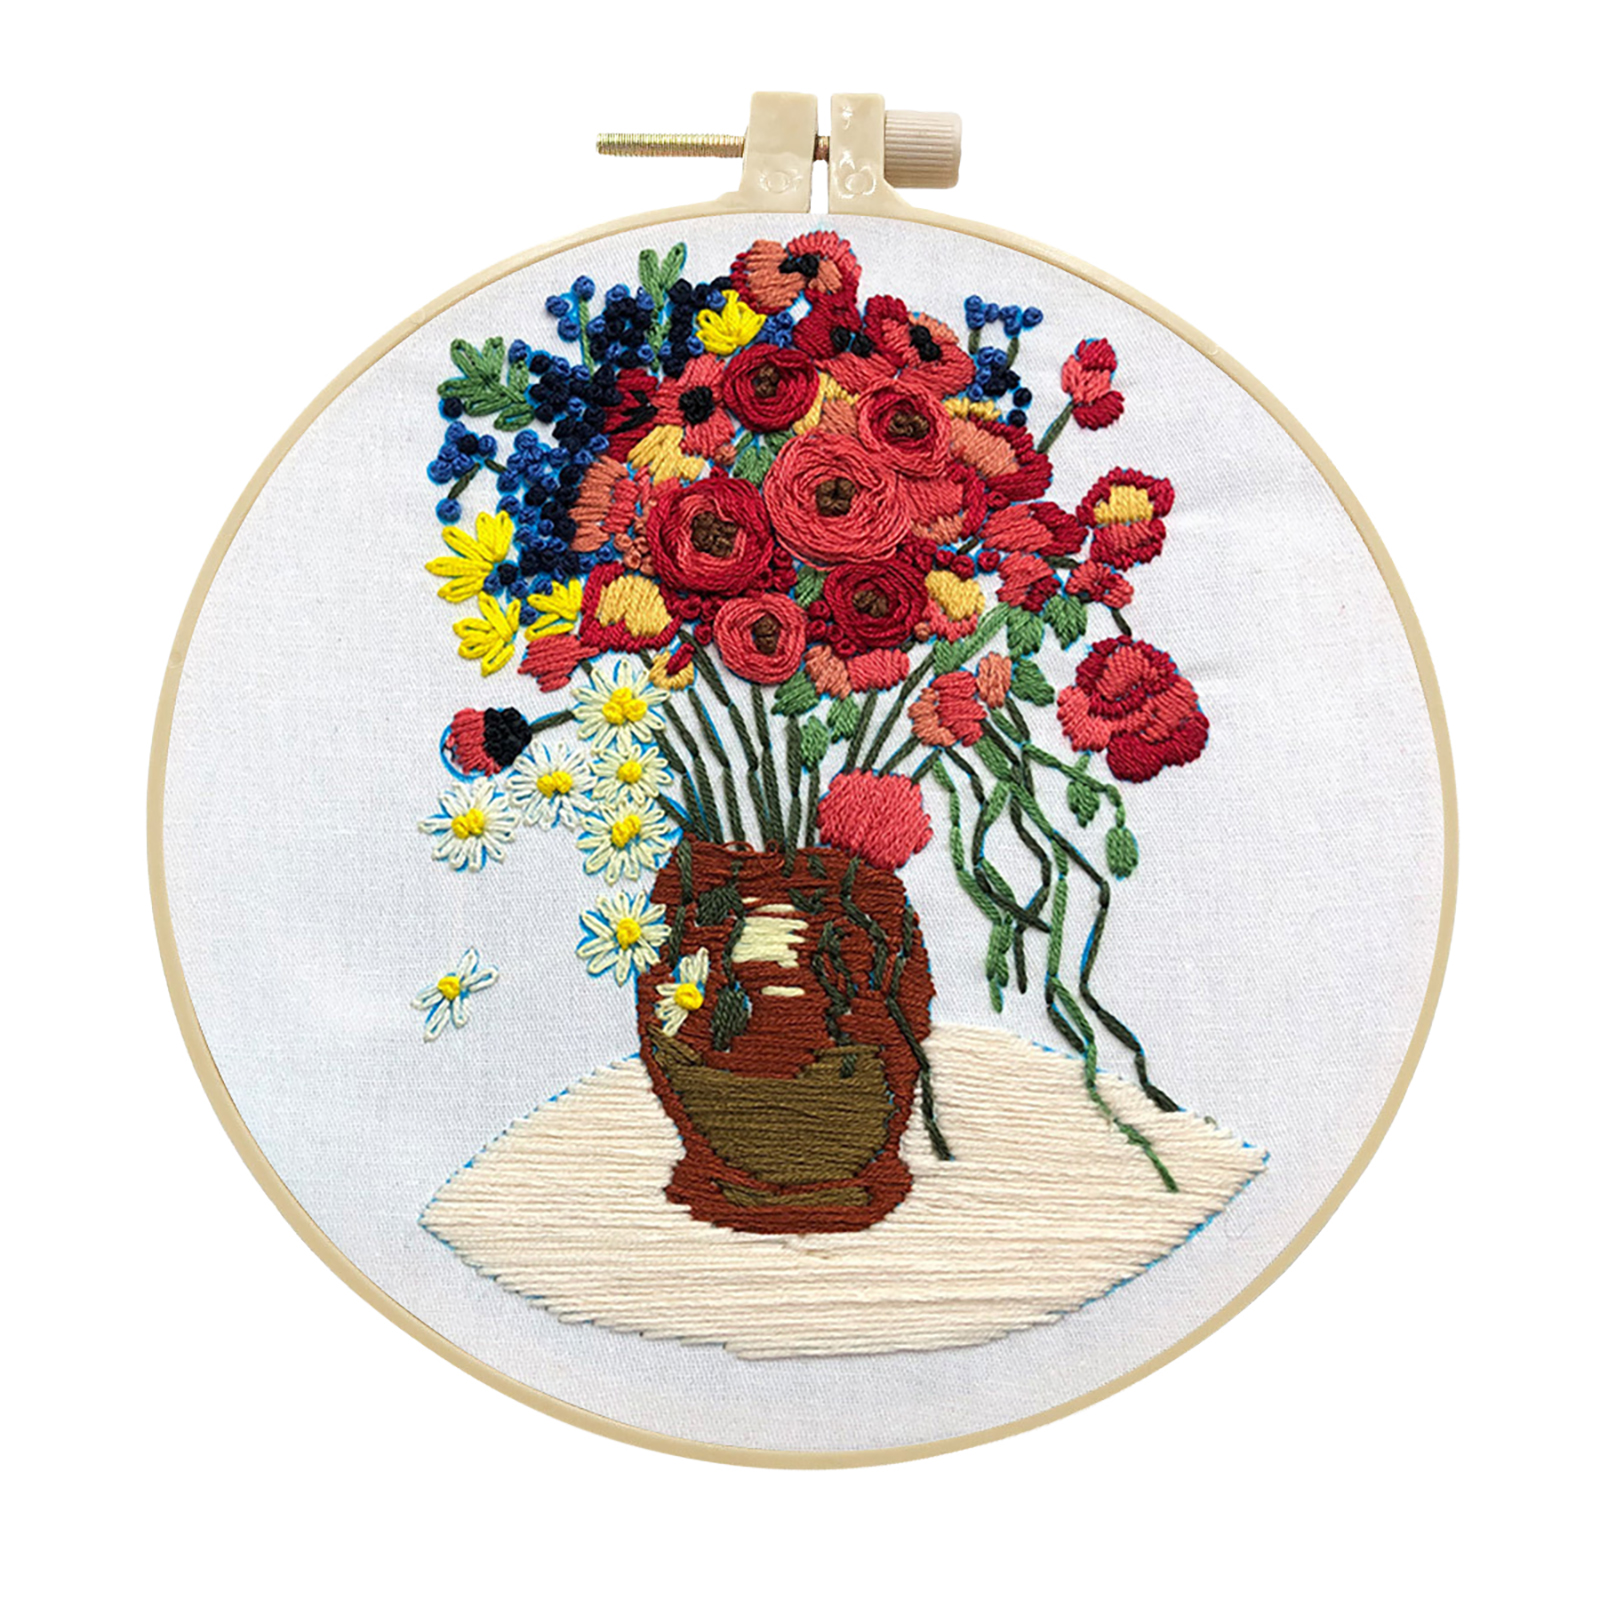 Handmade Embroidery Kit Cross stitch kit for Adult Beginner - Van Gogh Daisy Pattern